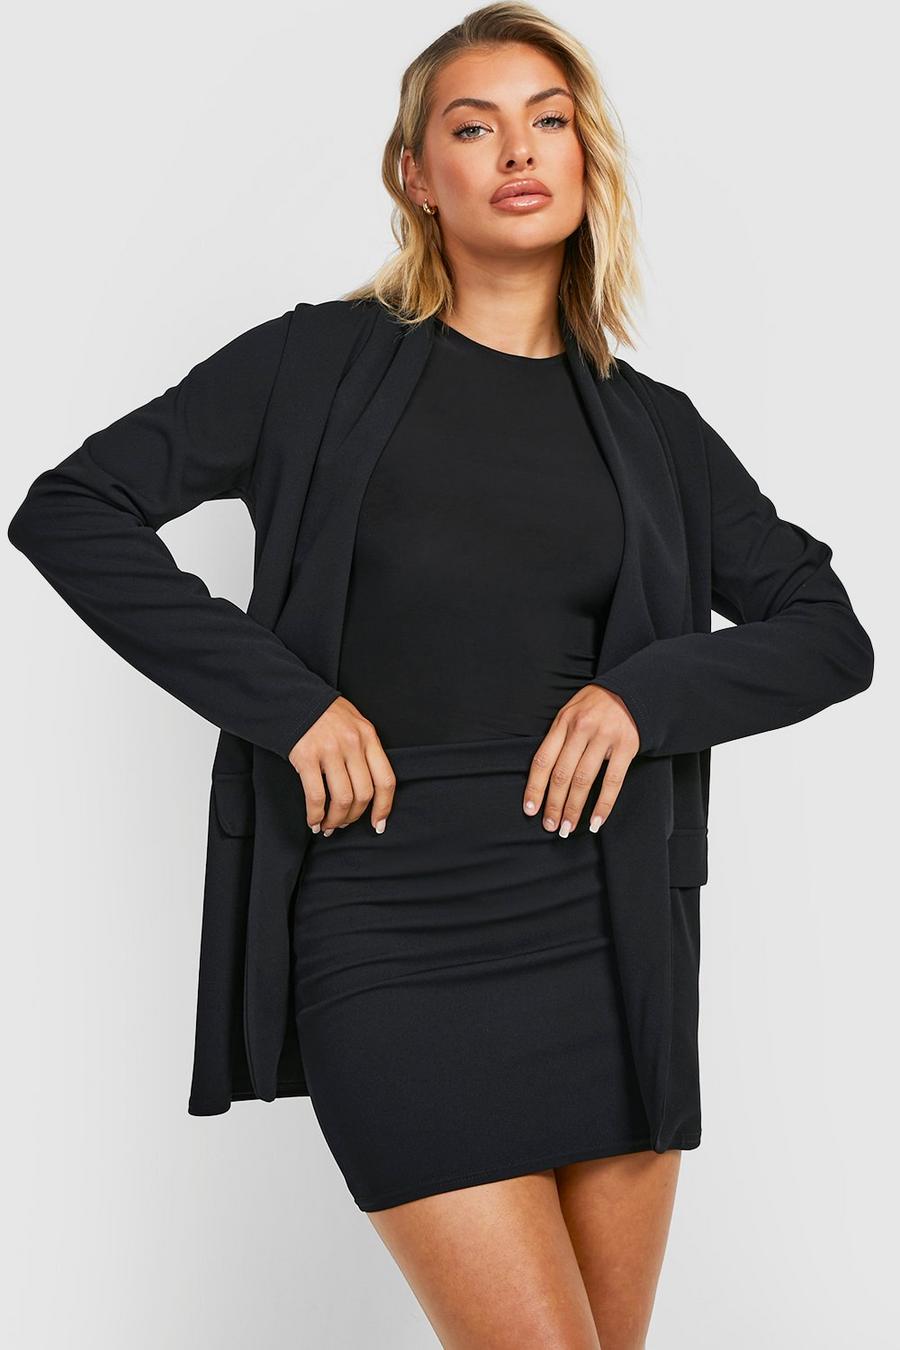 Black Jersey Knit Blazer & Micro Mini Skirt image number 1